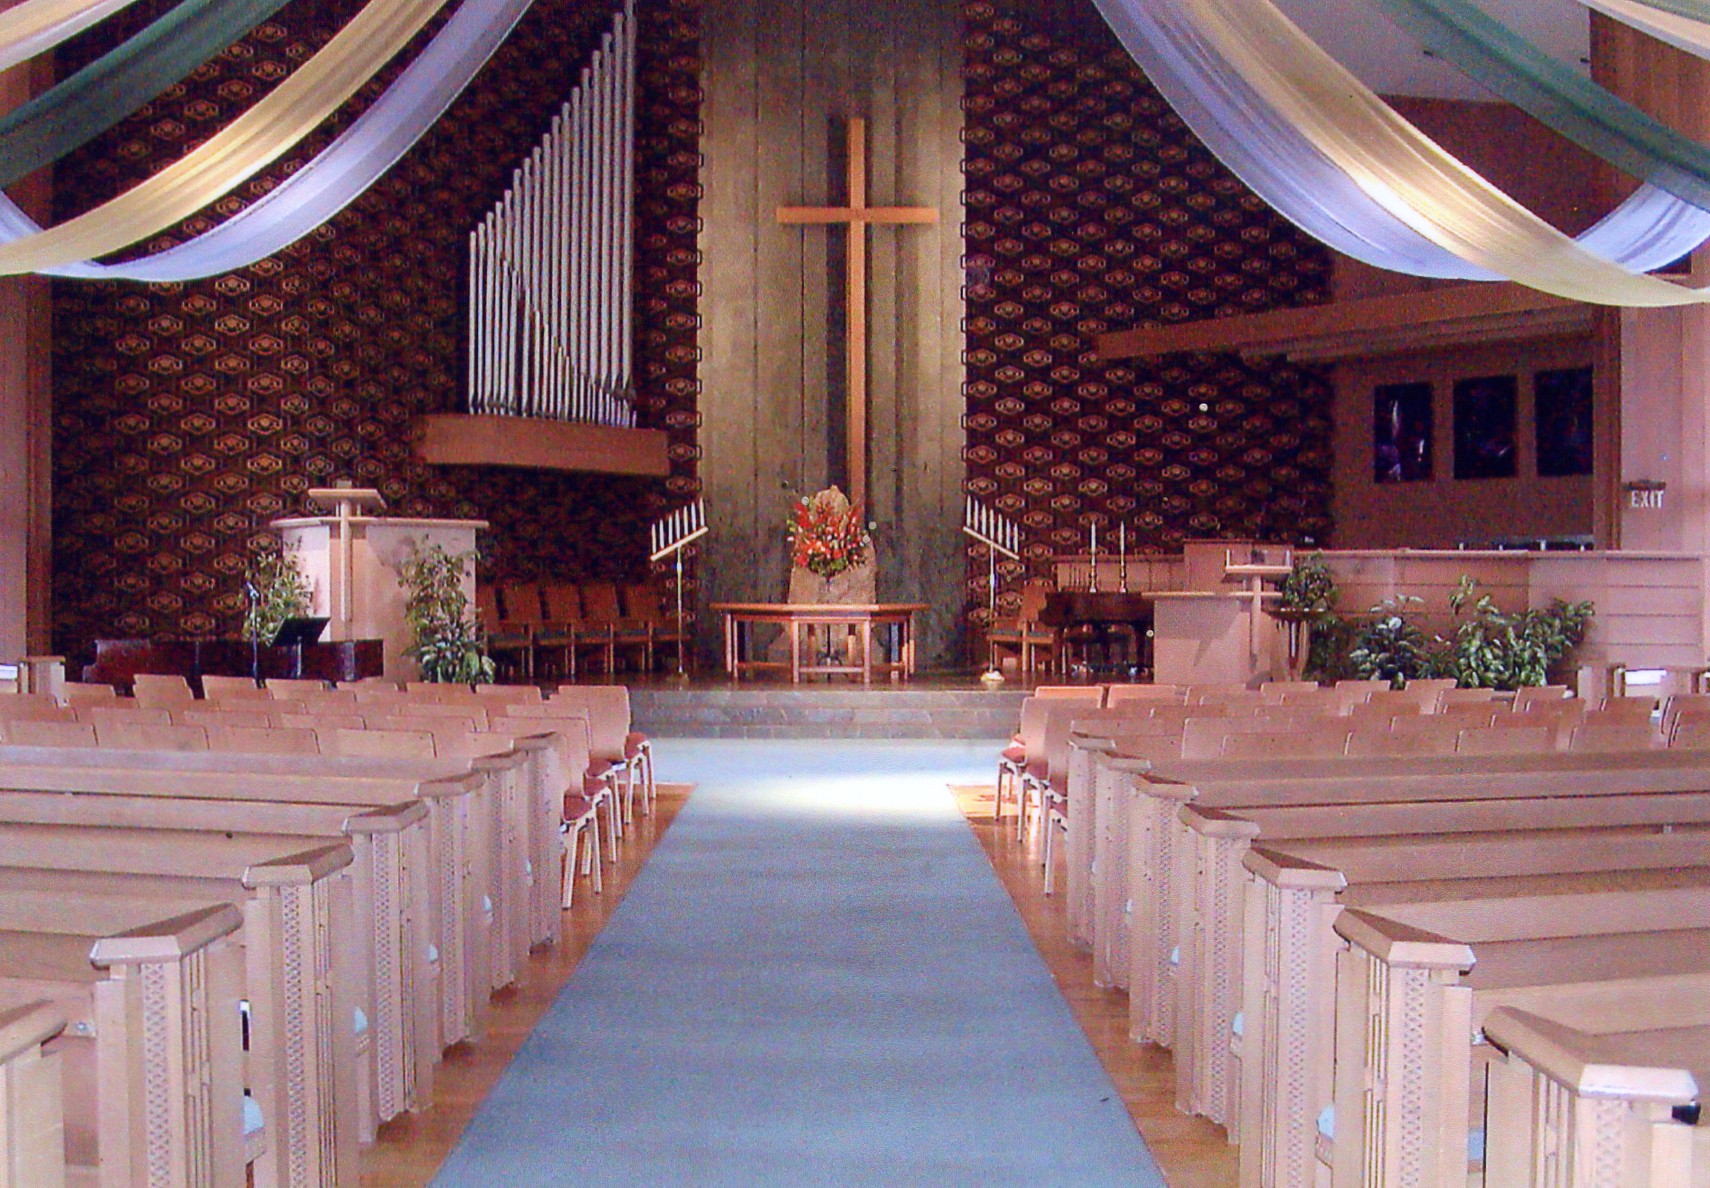 Holy Cross Sanctuary